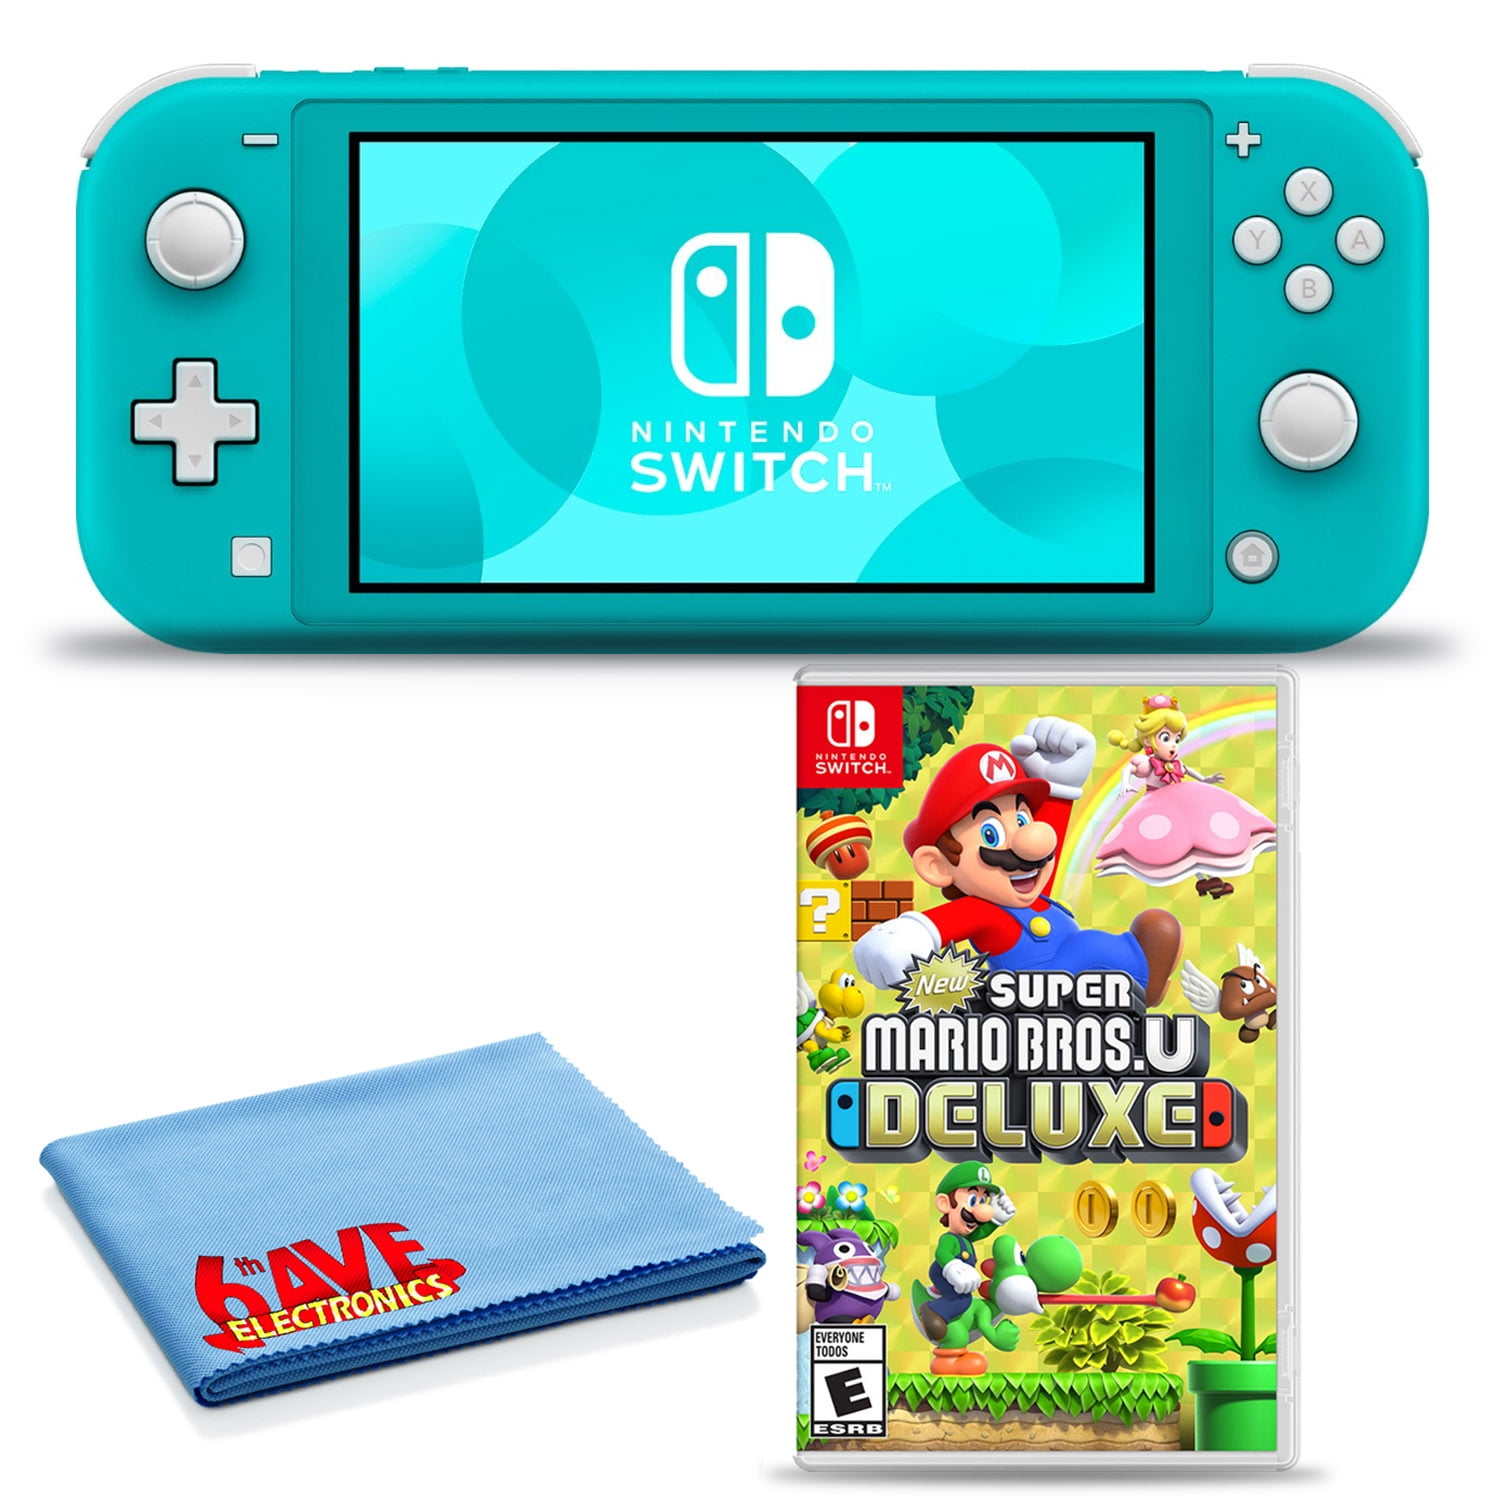 Nintendo Switch Lite (Coral) Bundle with Super Mario Bros. U and 